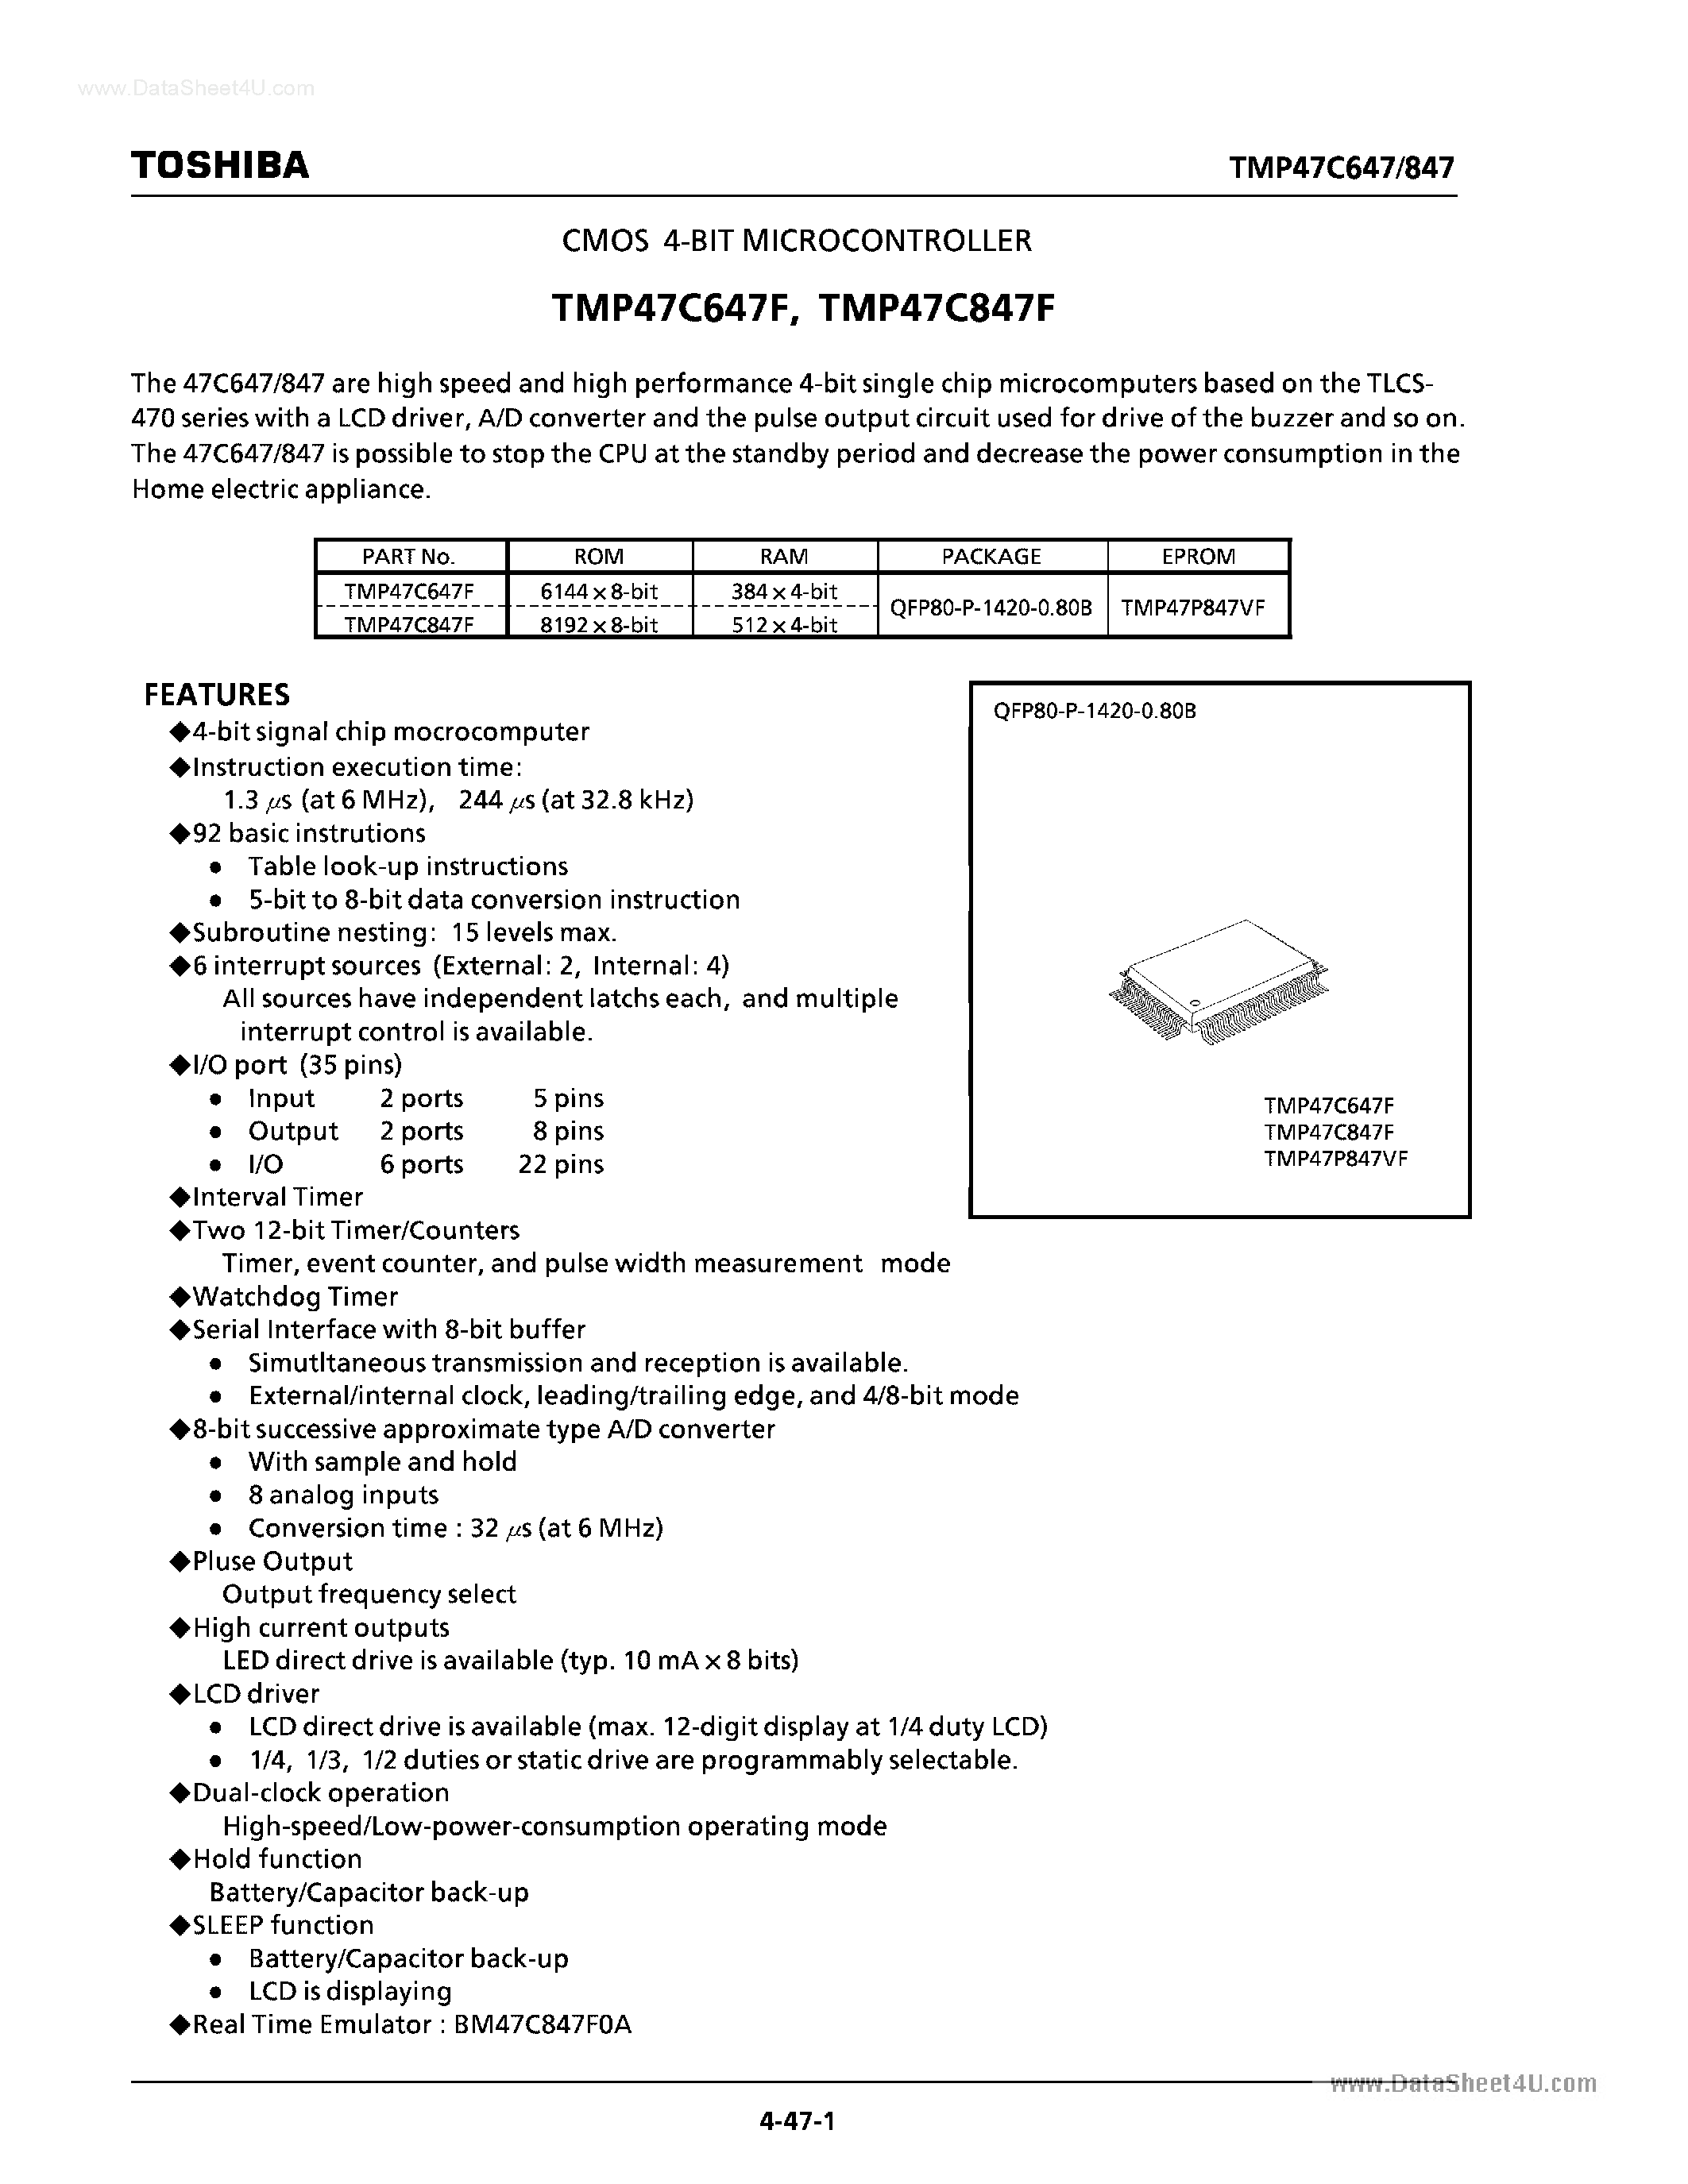 Datasheet TMP47C647F - (TMP47C647F / TMP47C847F) CMOS 4-bit Microcontroller page 1